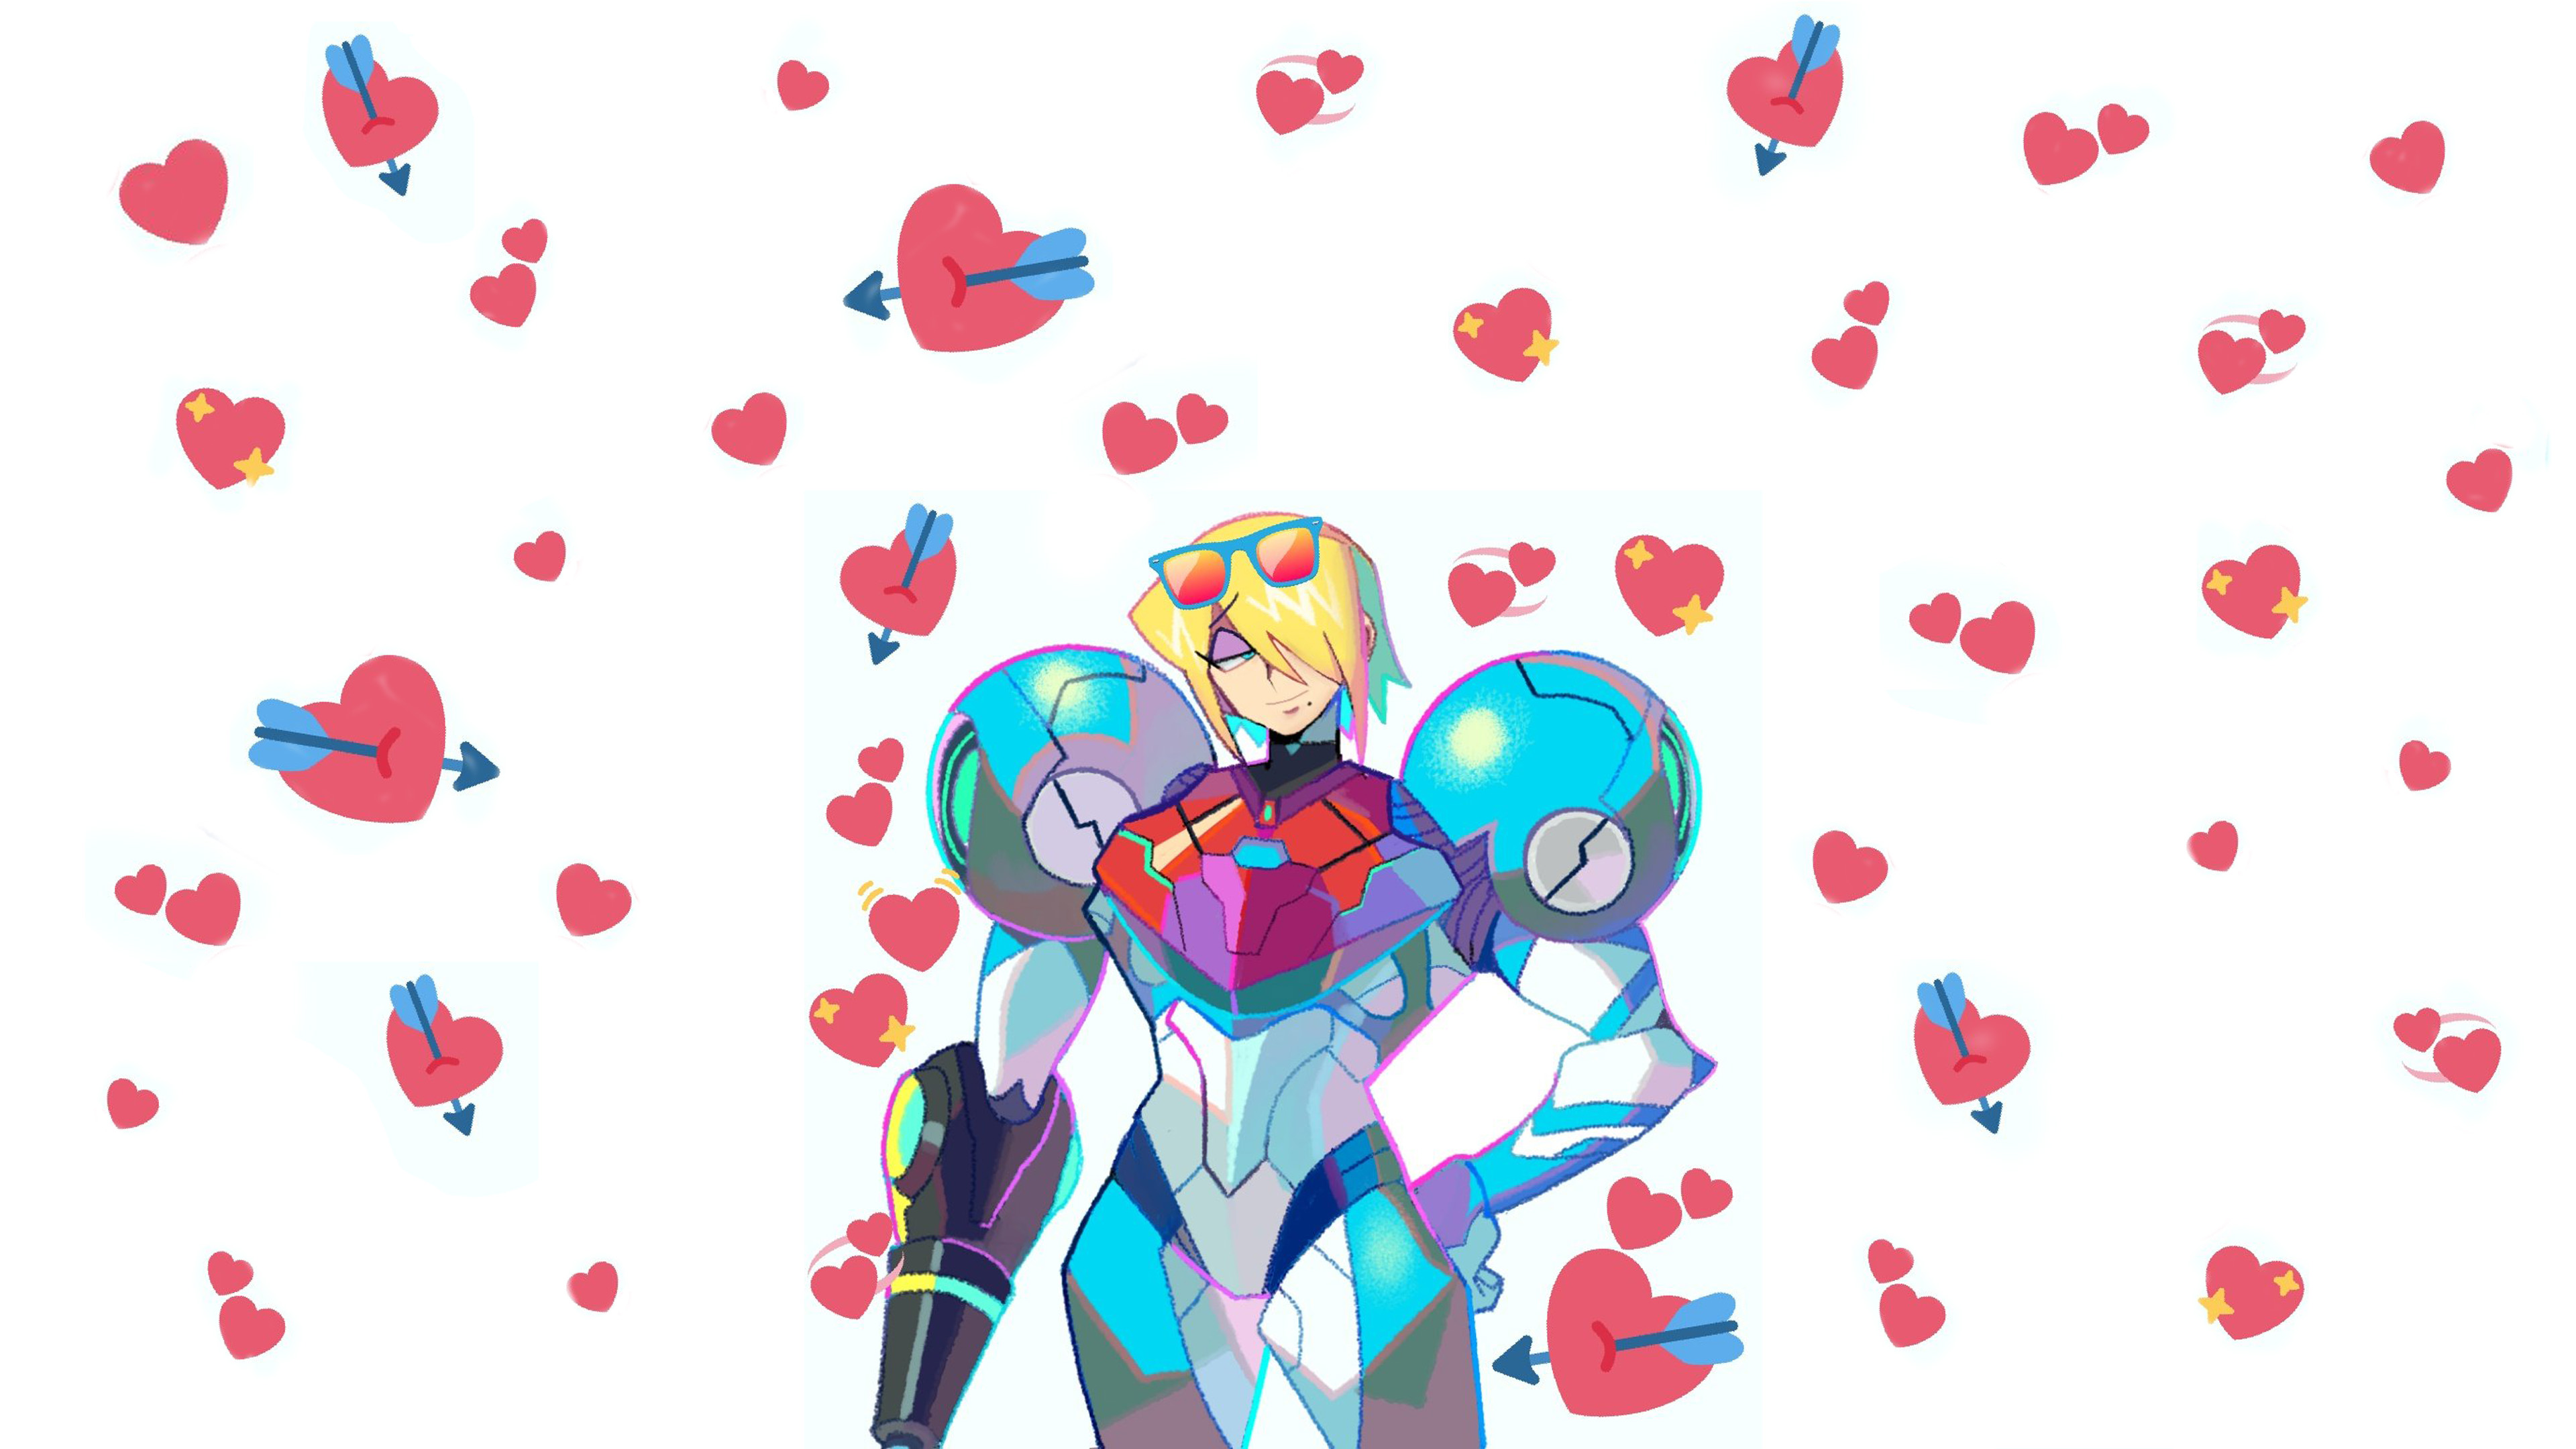 Metroid Samus Aran Metroid Dread Nintendo Blonde Power Armor Cannon Sunglasses Hearts Video Games Vi 3840x2160